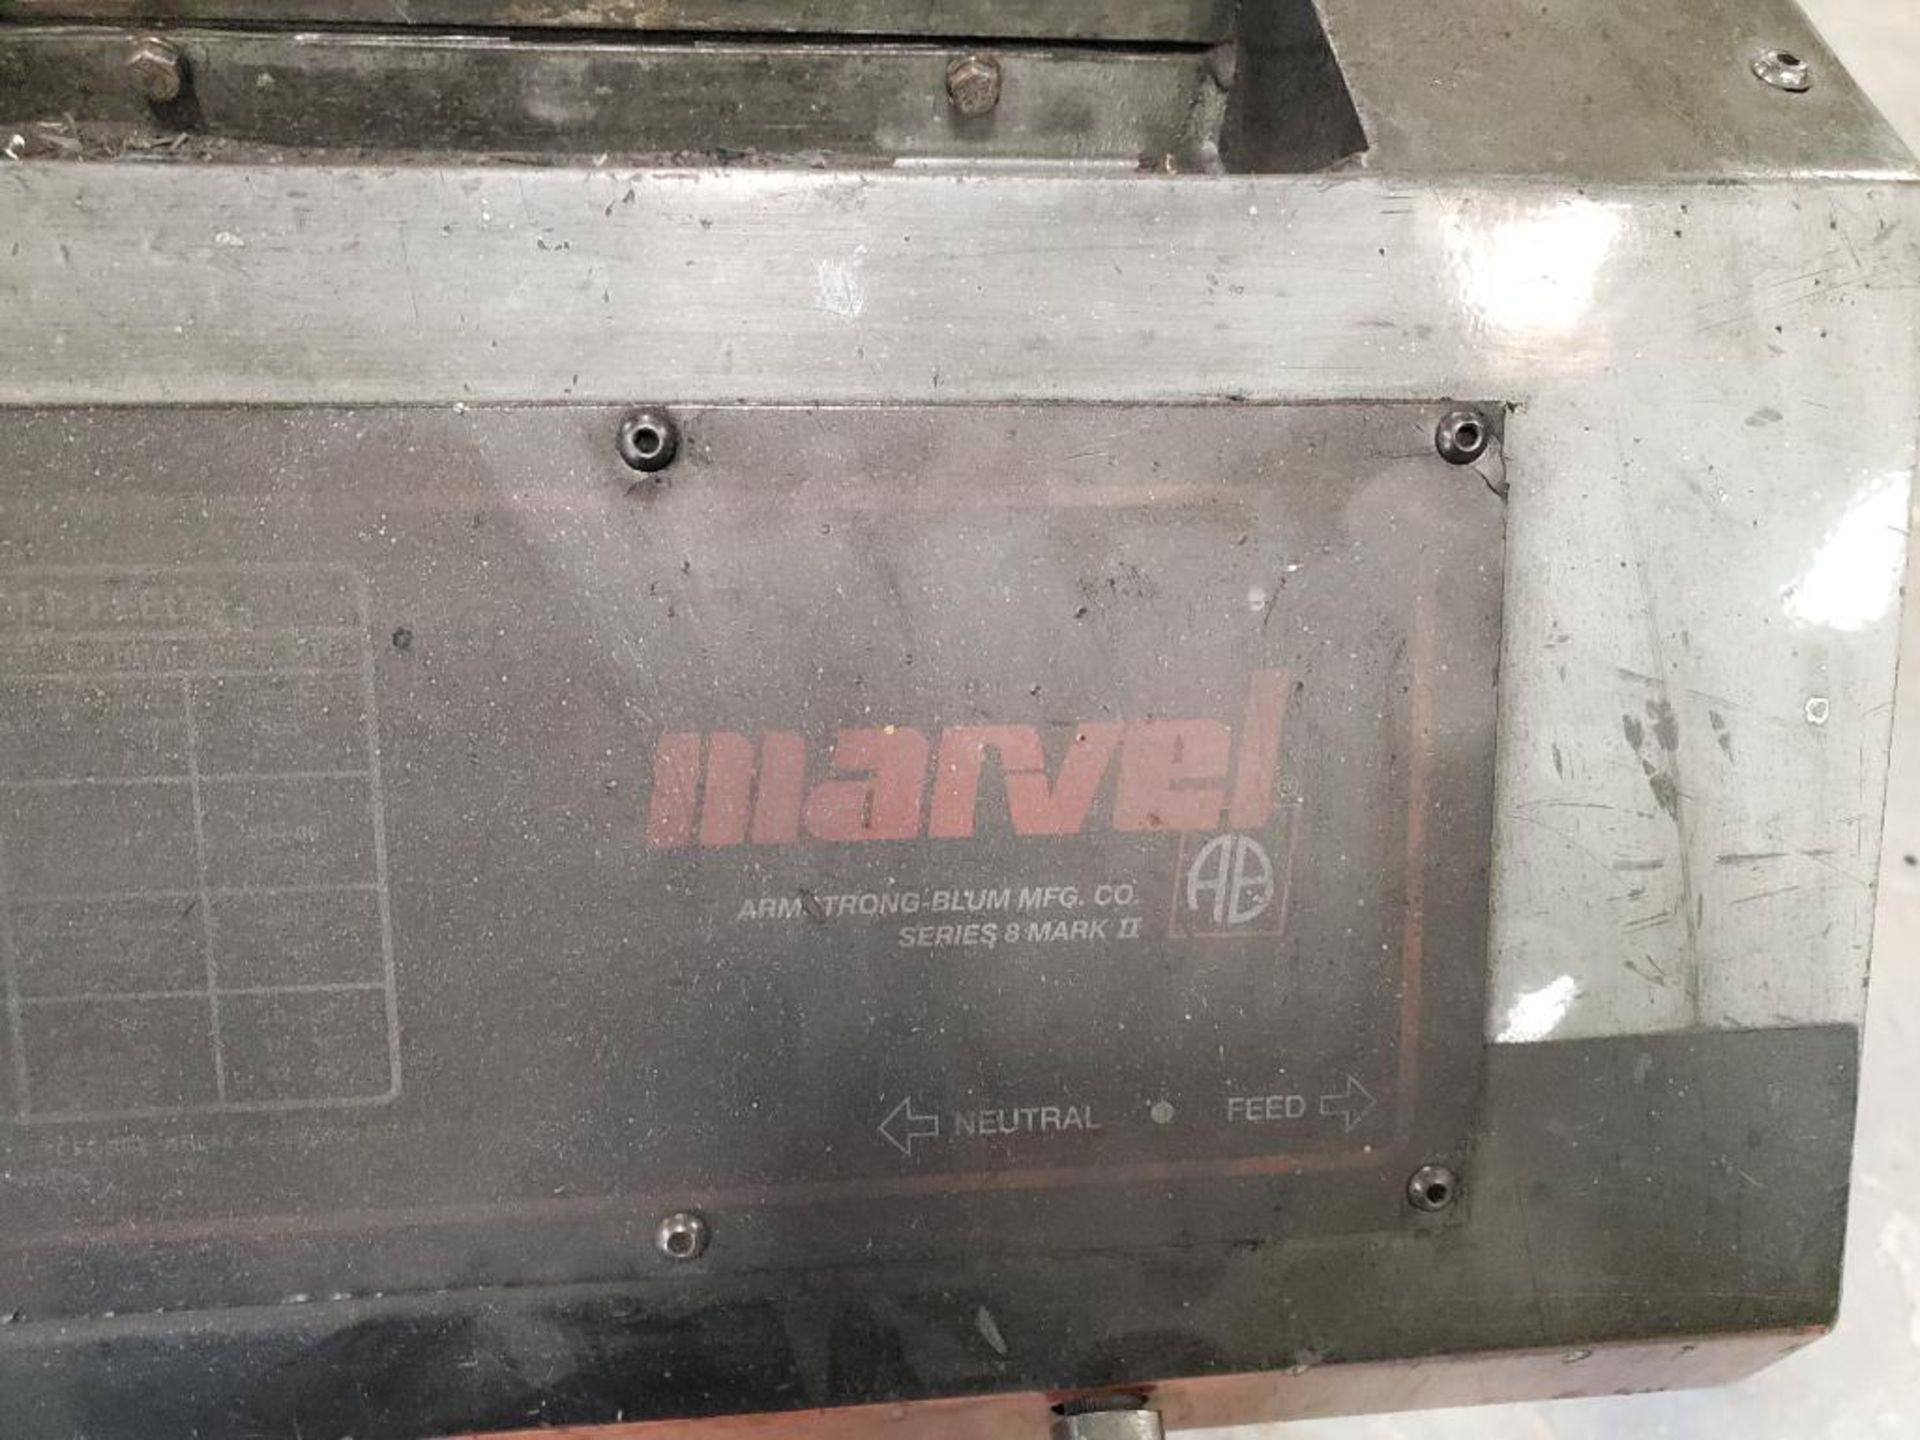 18in x 22in Marvel series 8 Mark II vertical tilt frame band saw. - Image 15 of 41